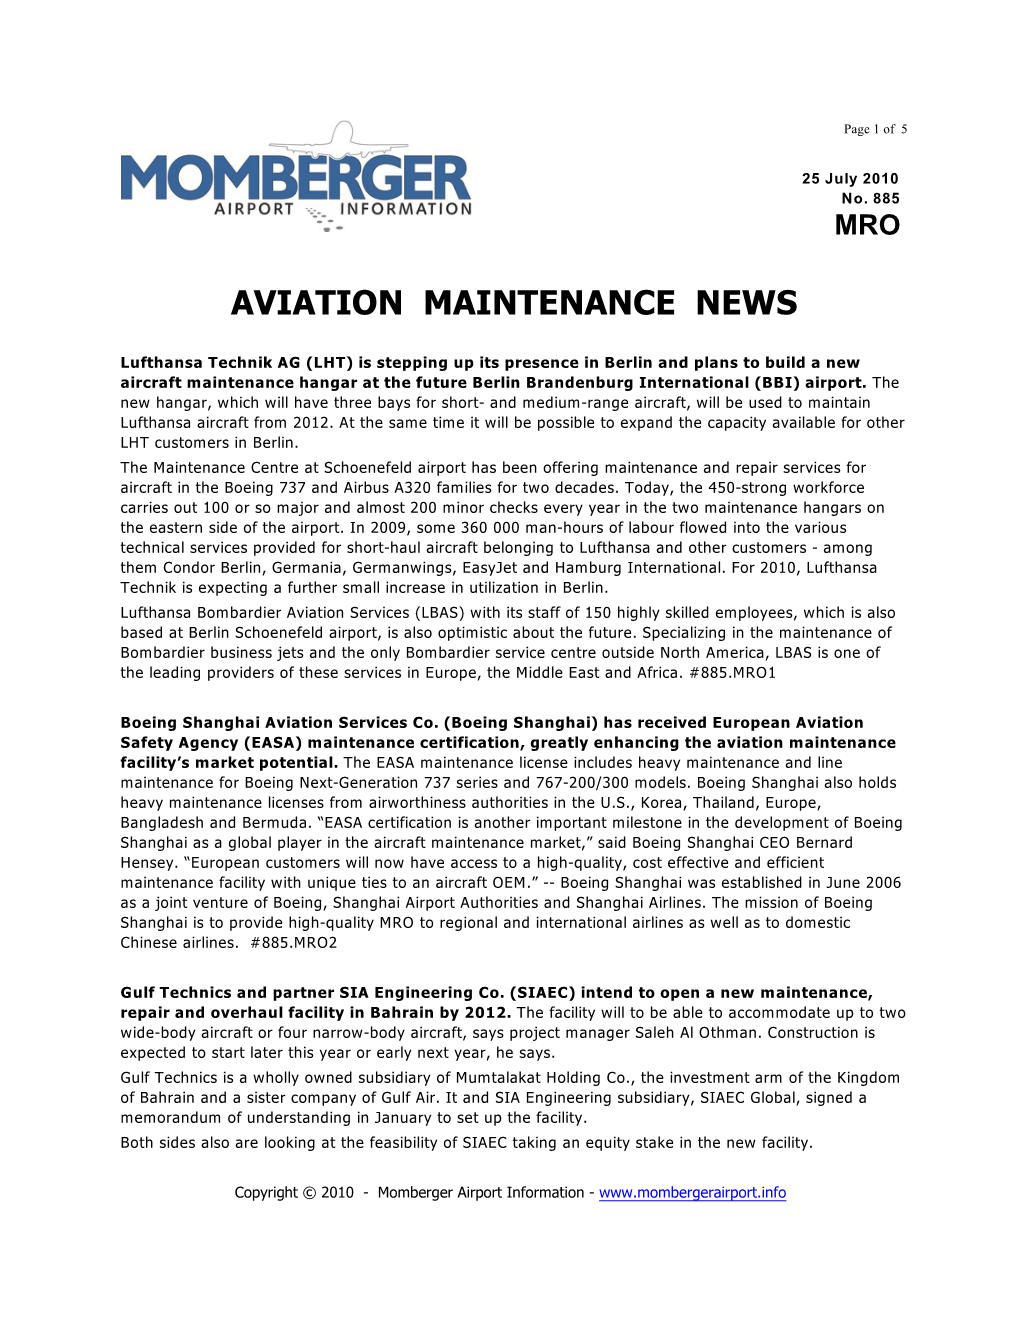 Aviation Maintenance News